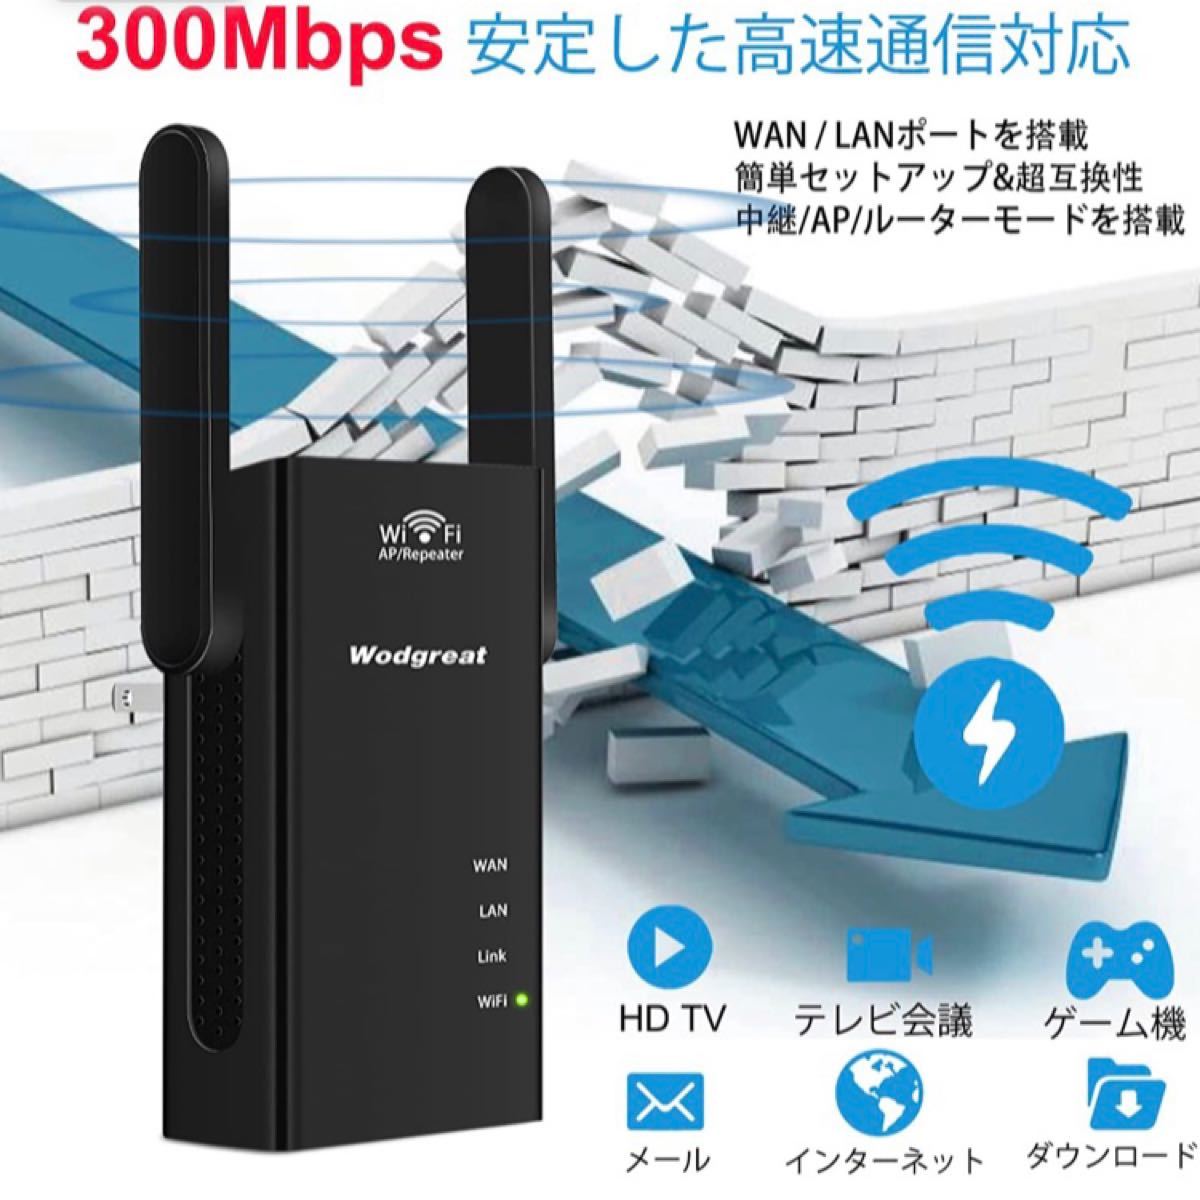 WiFi 無線LAN 中継機 WiFi中継器 11n/g/b 300MbpsWiFiブースター ルーター WIFI 増幅器